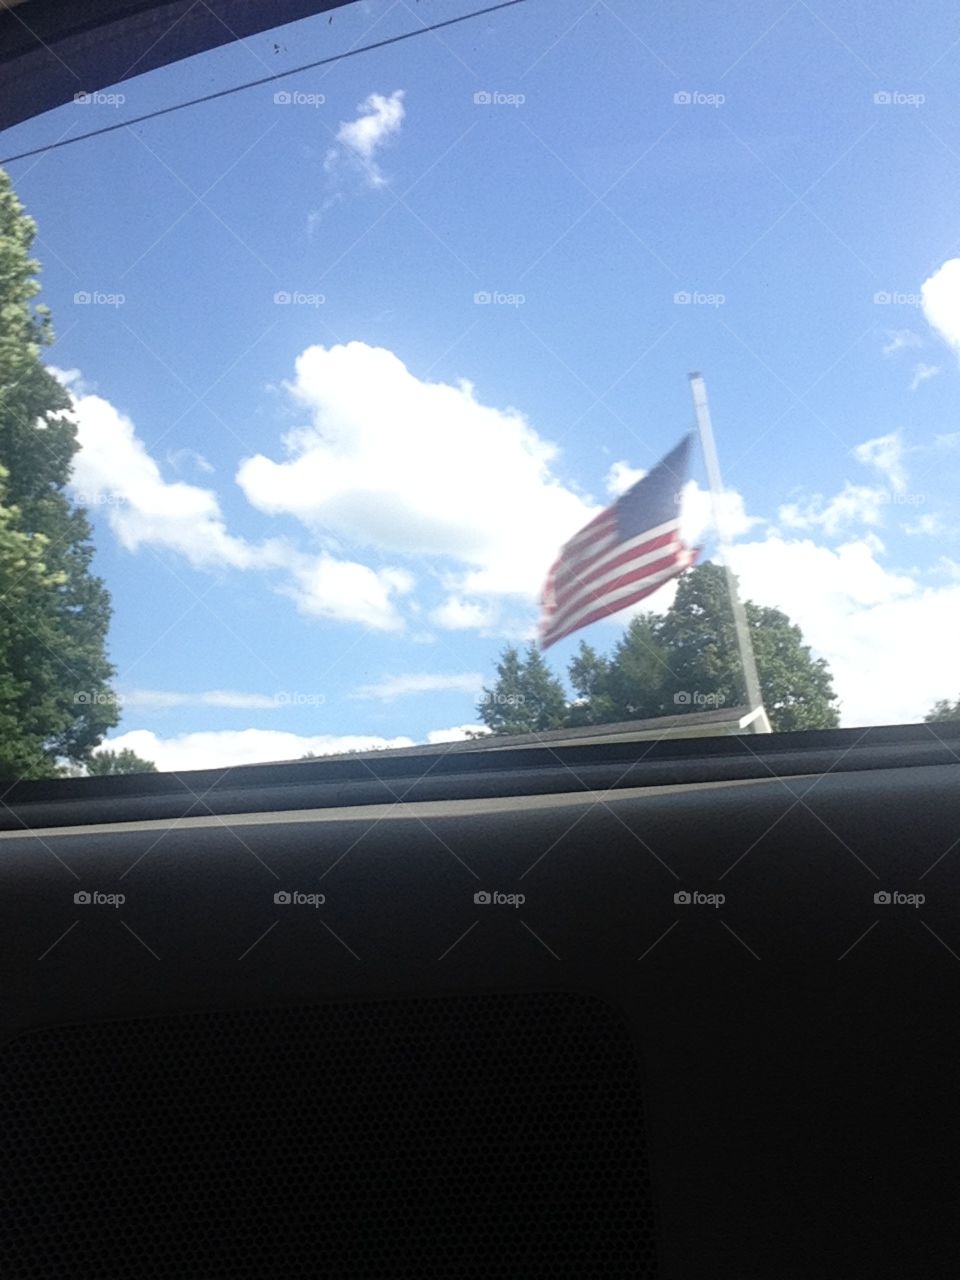 American flag from car window